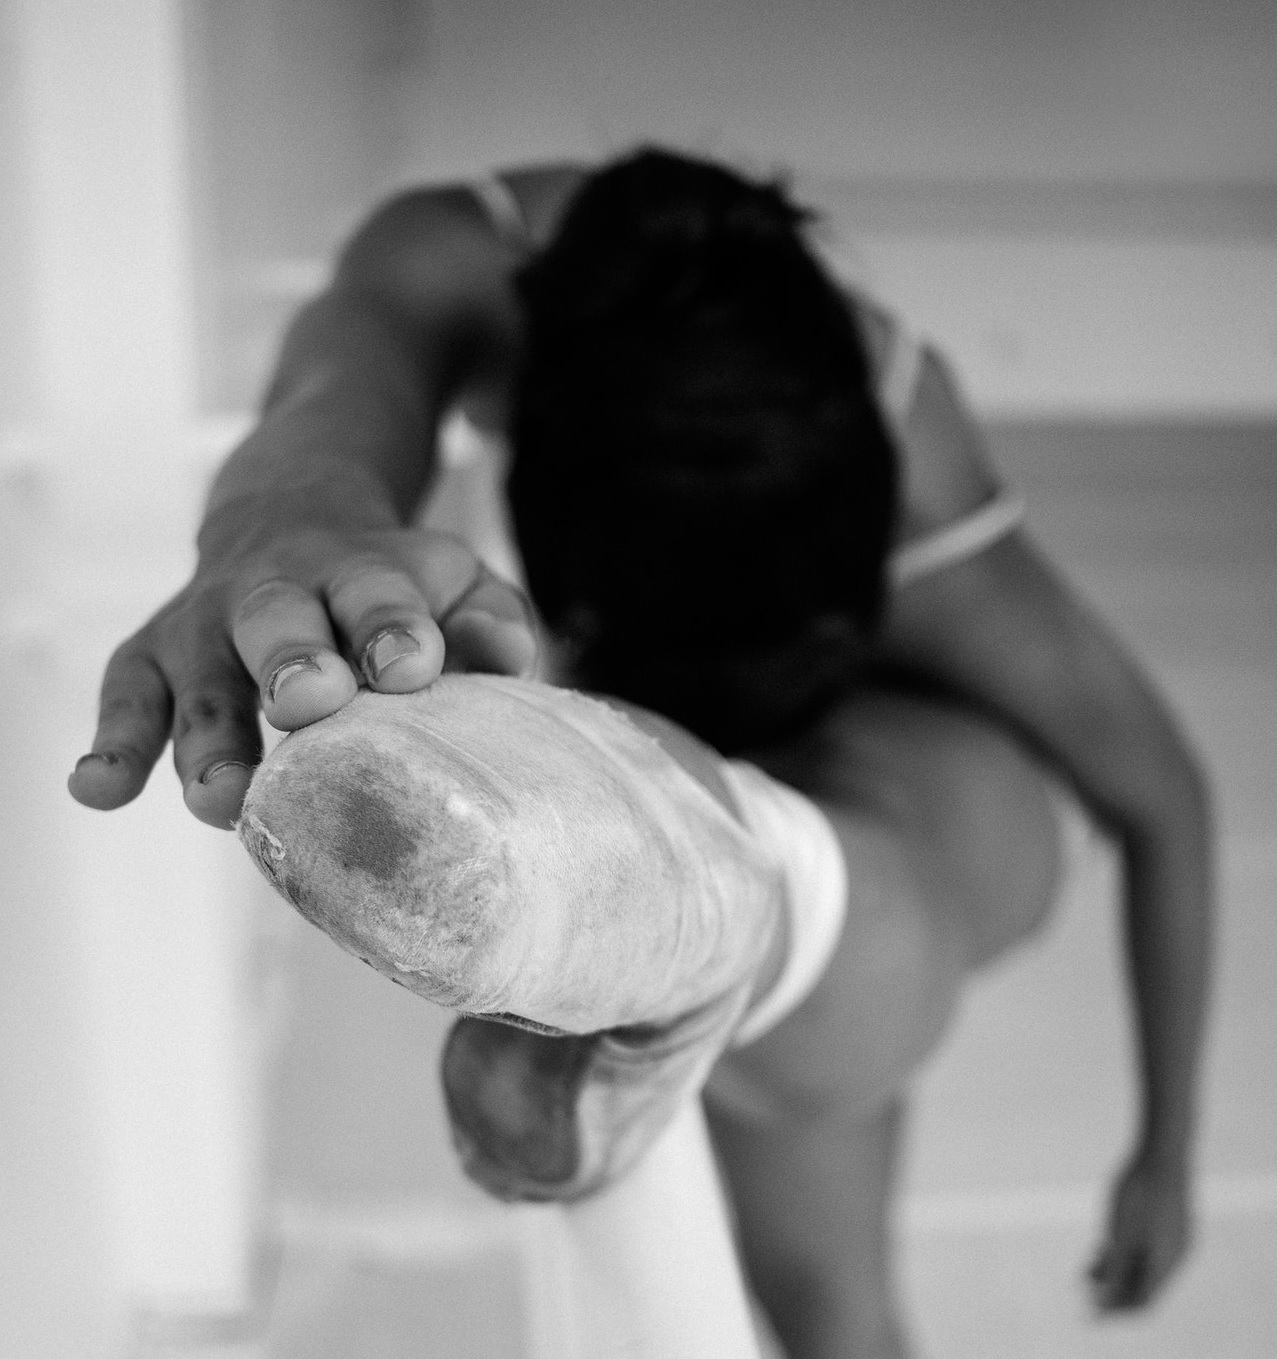 monochrome-photo-of-woman-stretching-her-leg-1820143_vagott.jpg